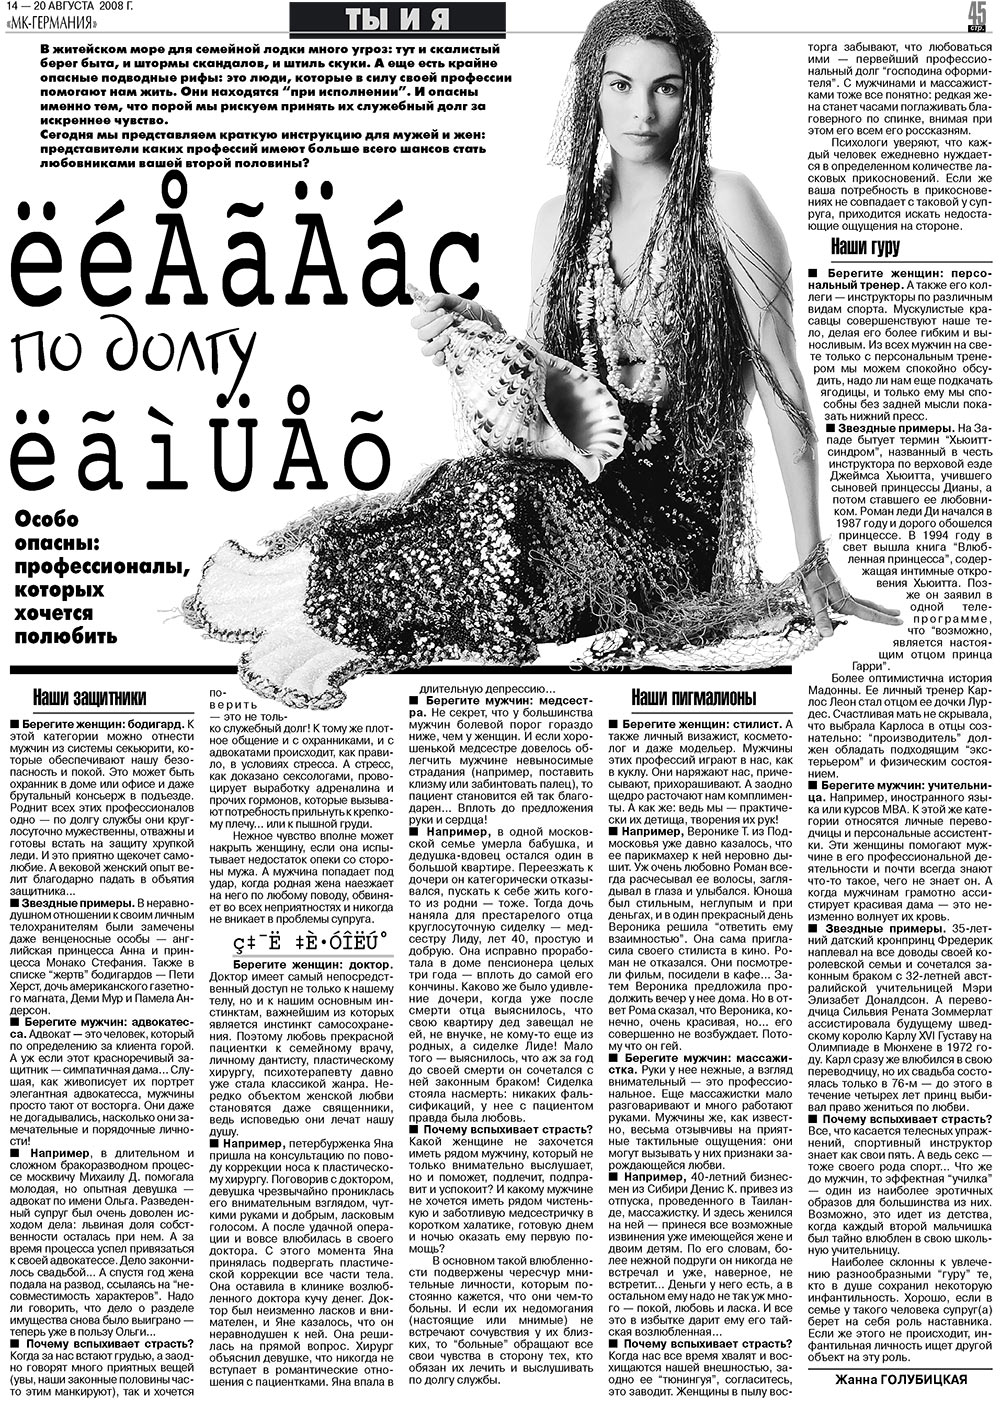 МК-Германия, газета. 2008 №33 стр.45